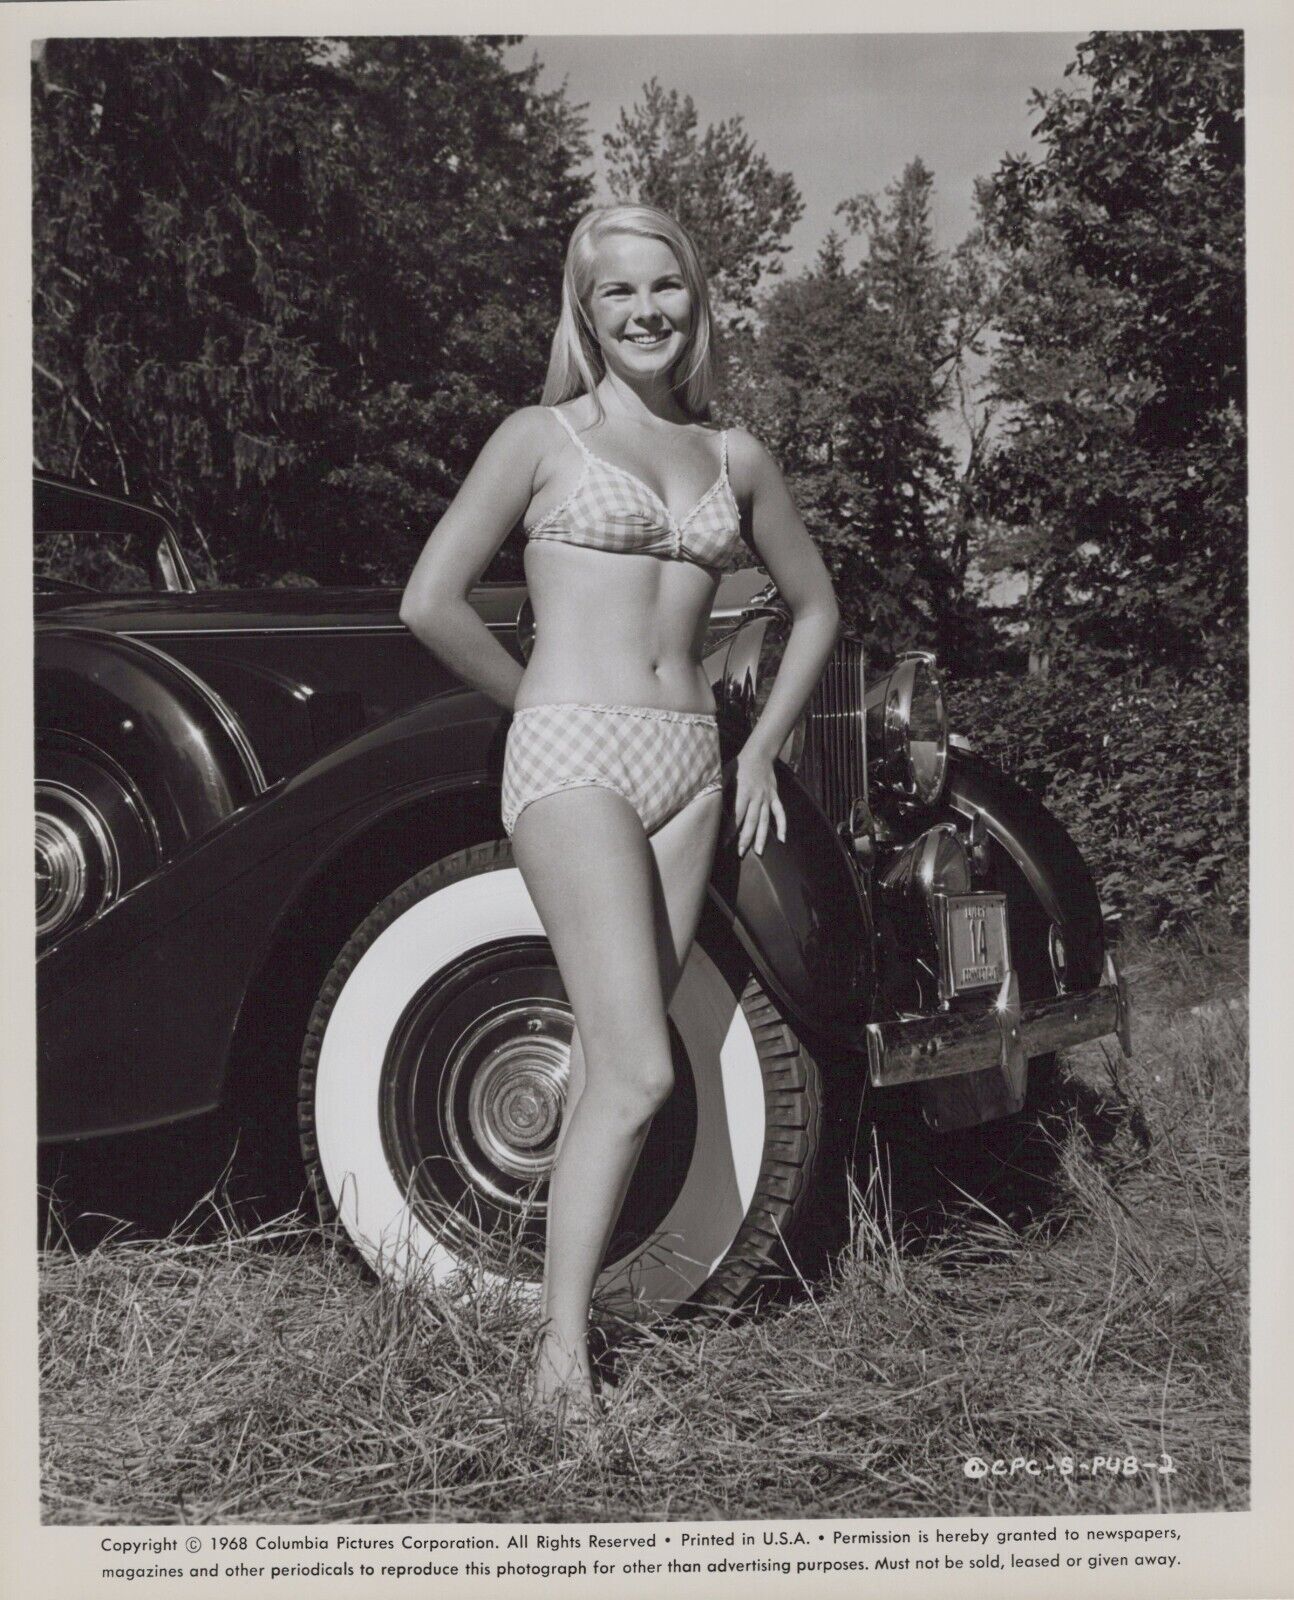 Janet Landgard in The Swimmer (1968) ❤ Original Vintage Cheesecake Photo K 541